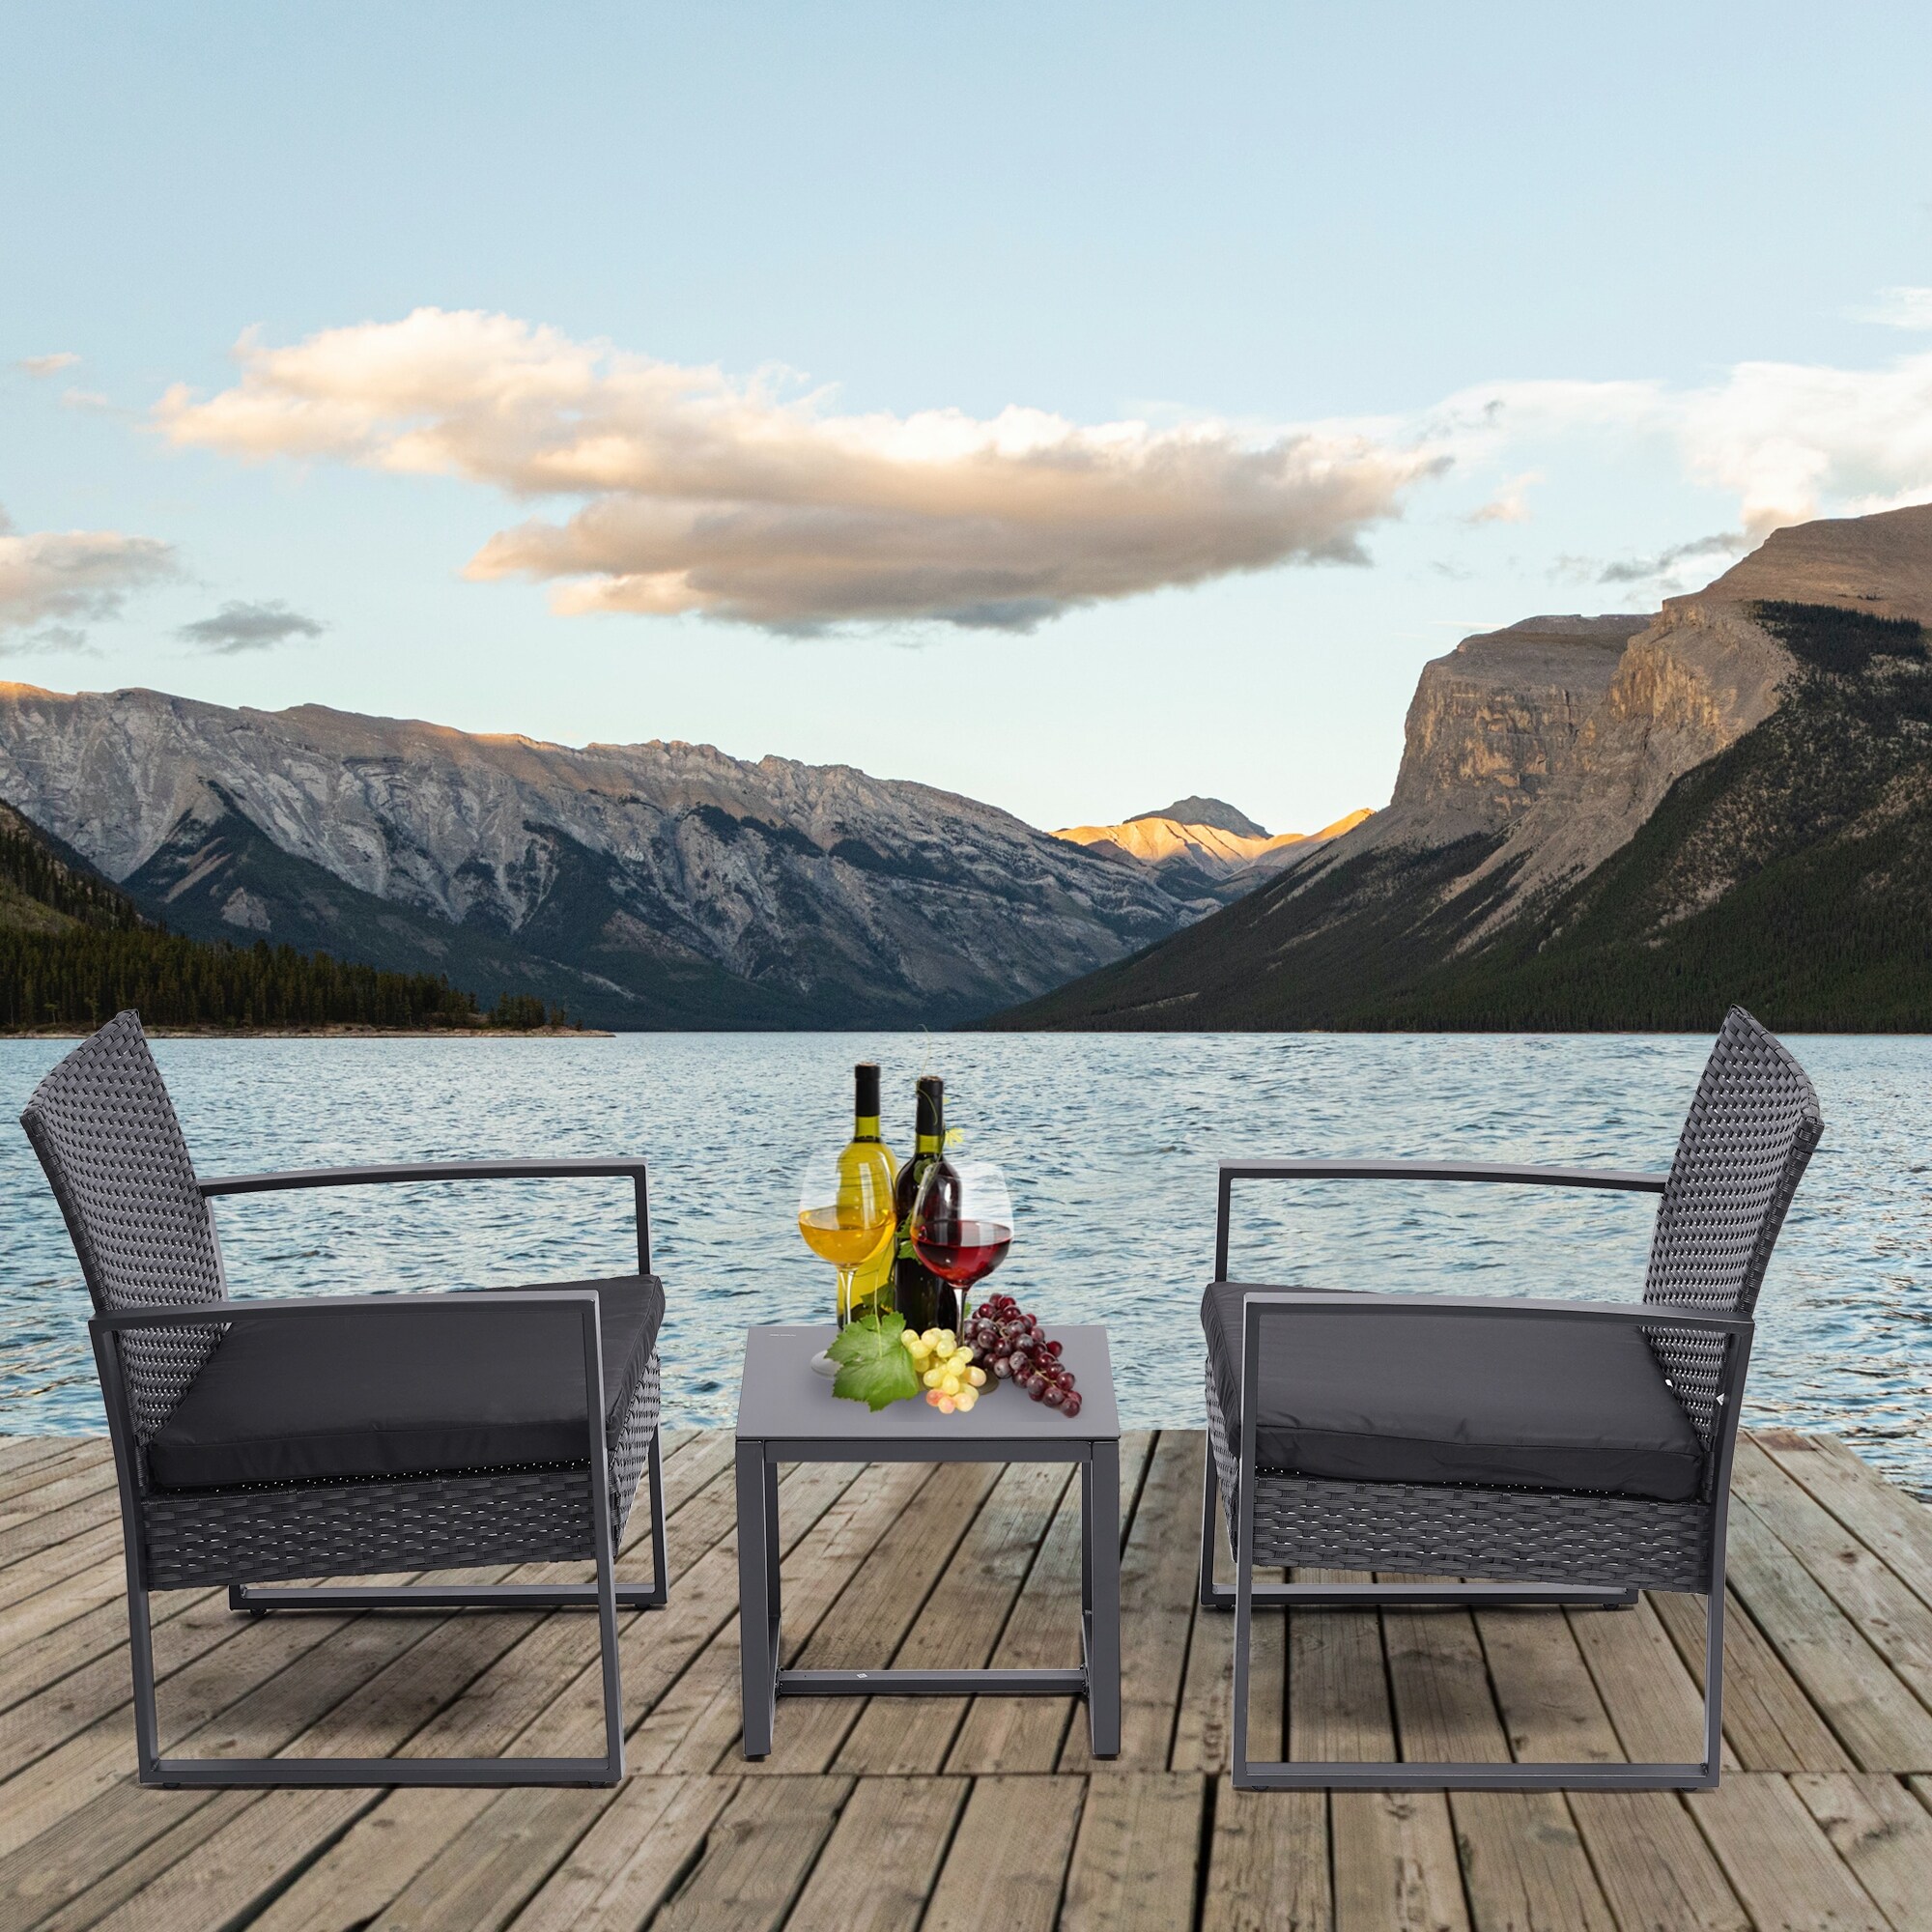 3 Pcs Patio Set Outdoor Wicker Patio Furniture Sets Rattan Chair Conversation Sets